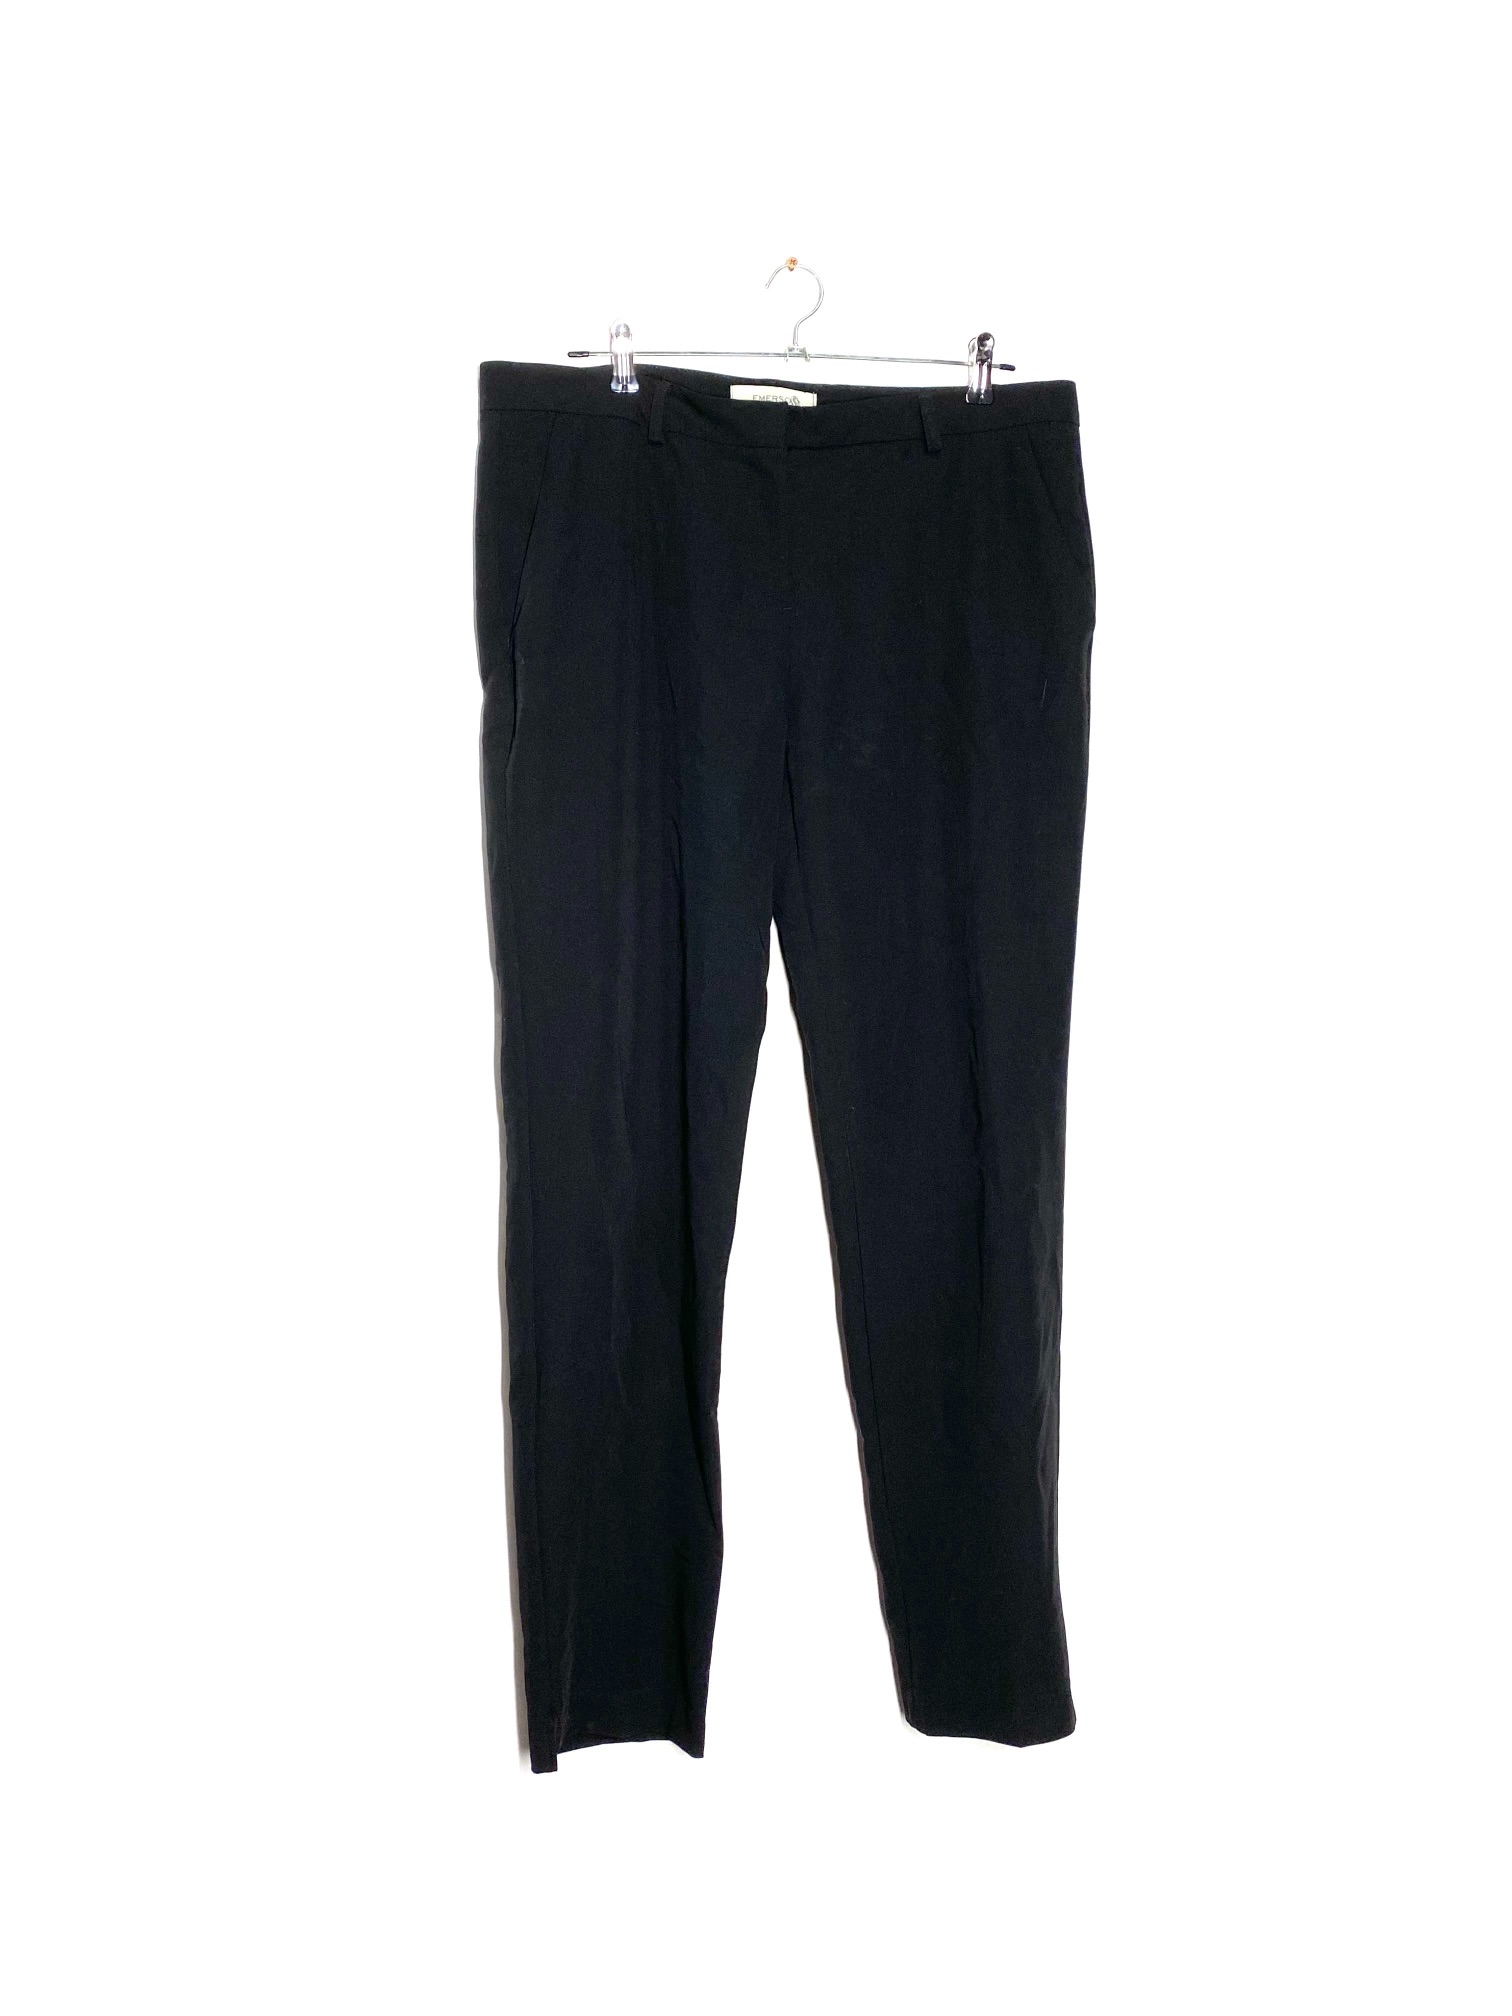 Emerson Basic Black Work Pants - Size 14 - The Re: Club